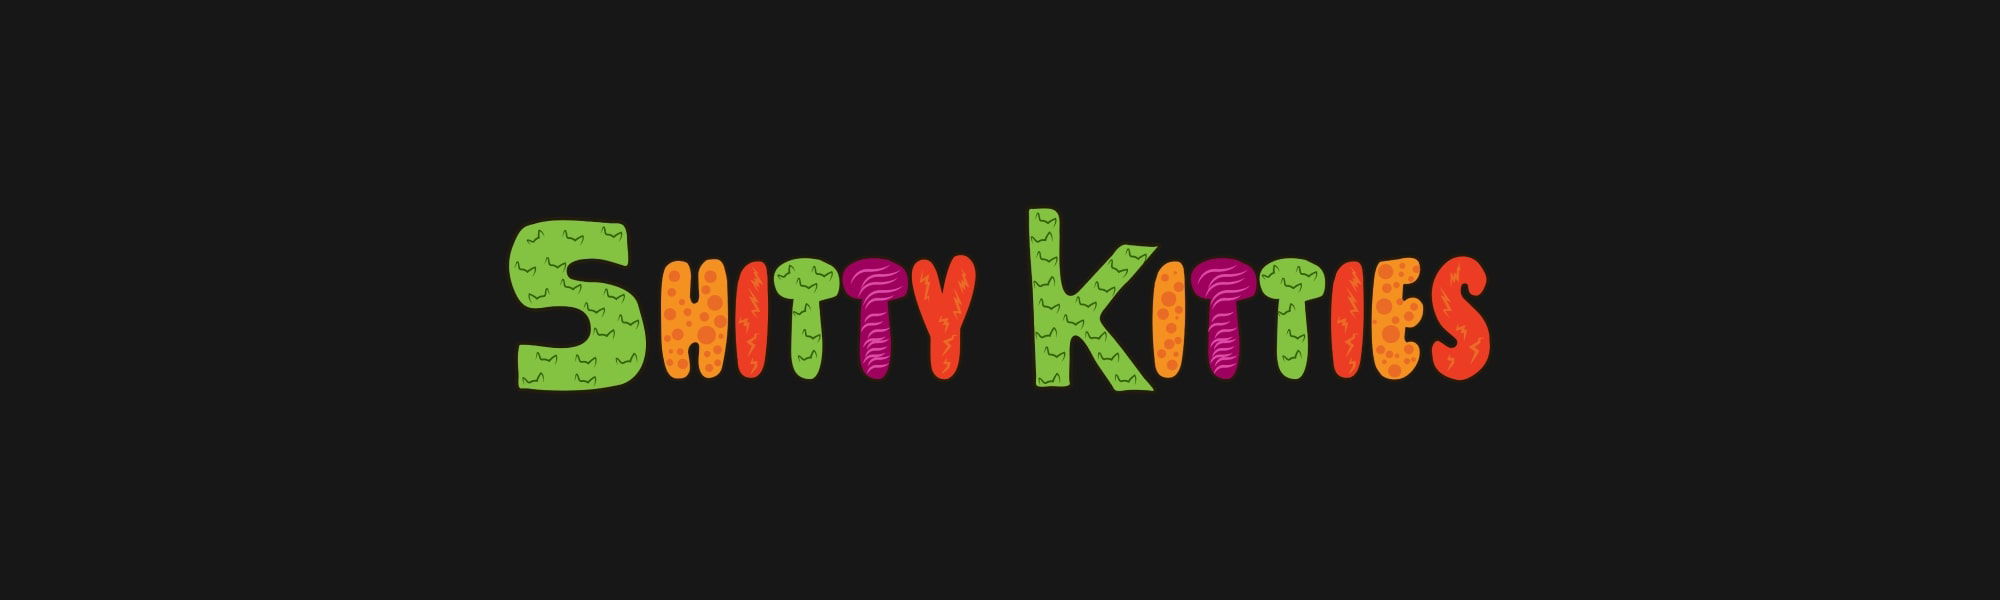 Shitty Kitties banner